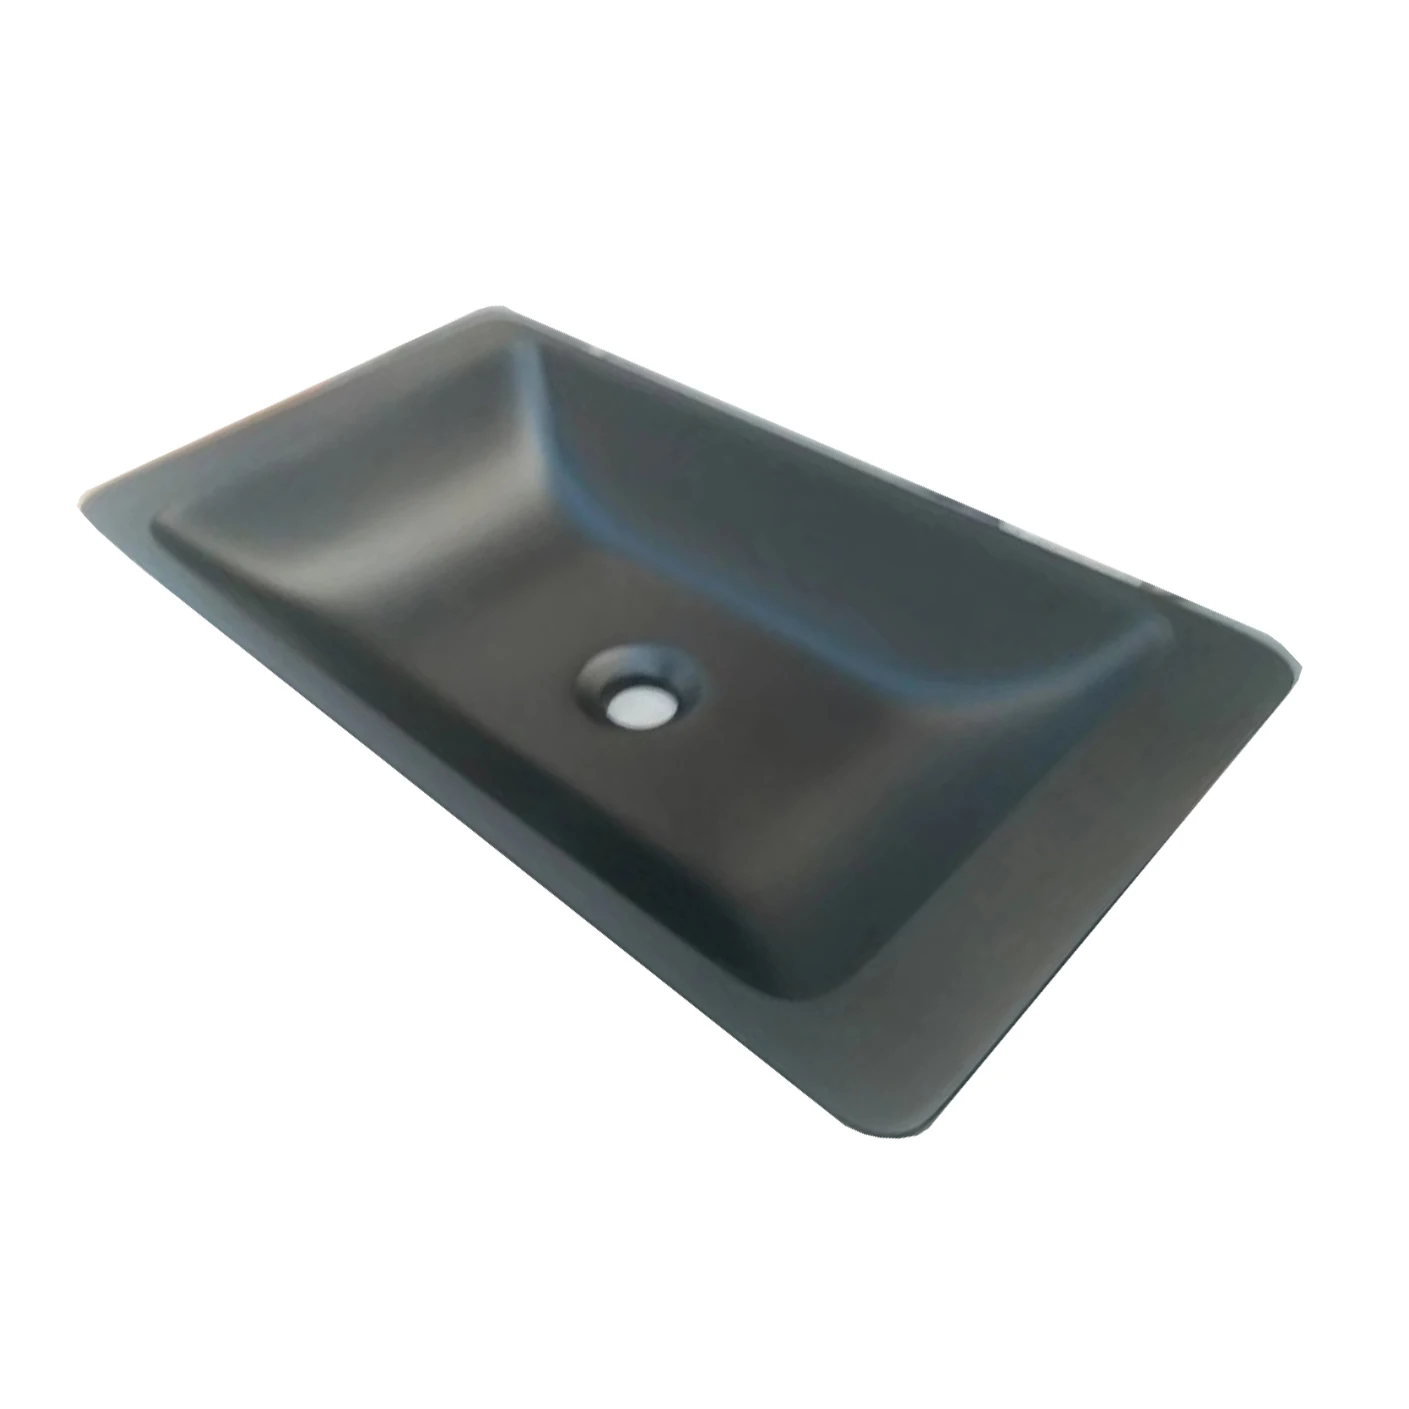 

Bathroom Rectangular Corain Stone Counter Top Vessel Sink Cloakroom Colored Resin Acrylic Wash Basin 3859-647